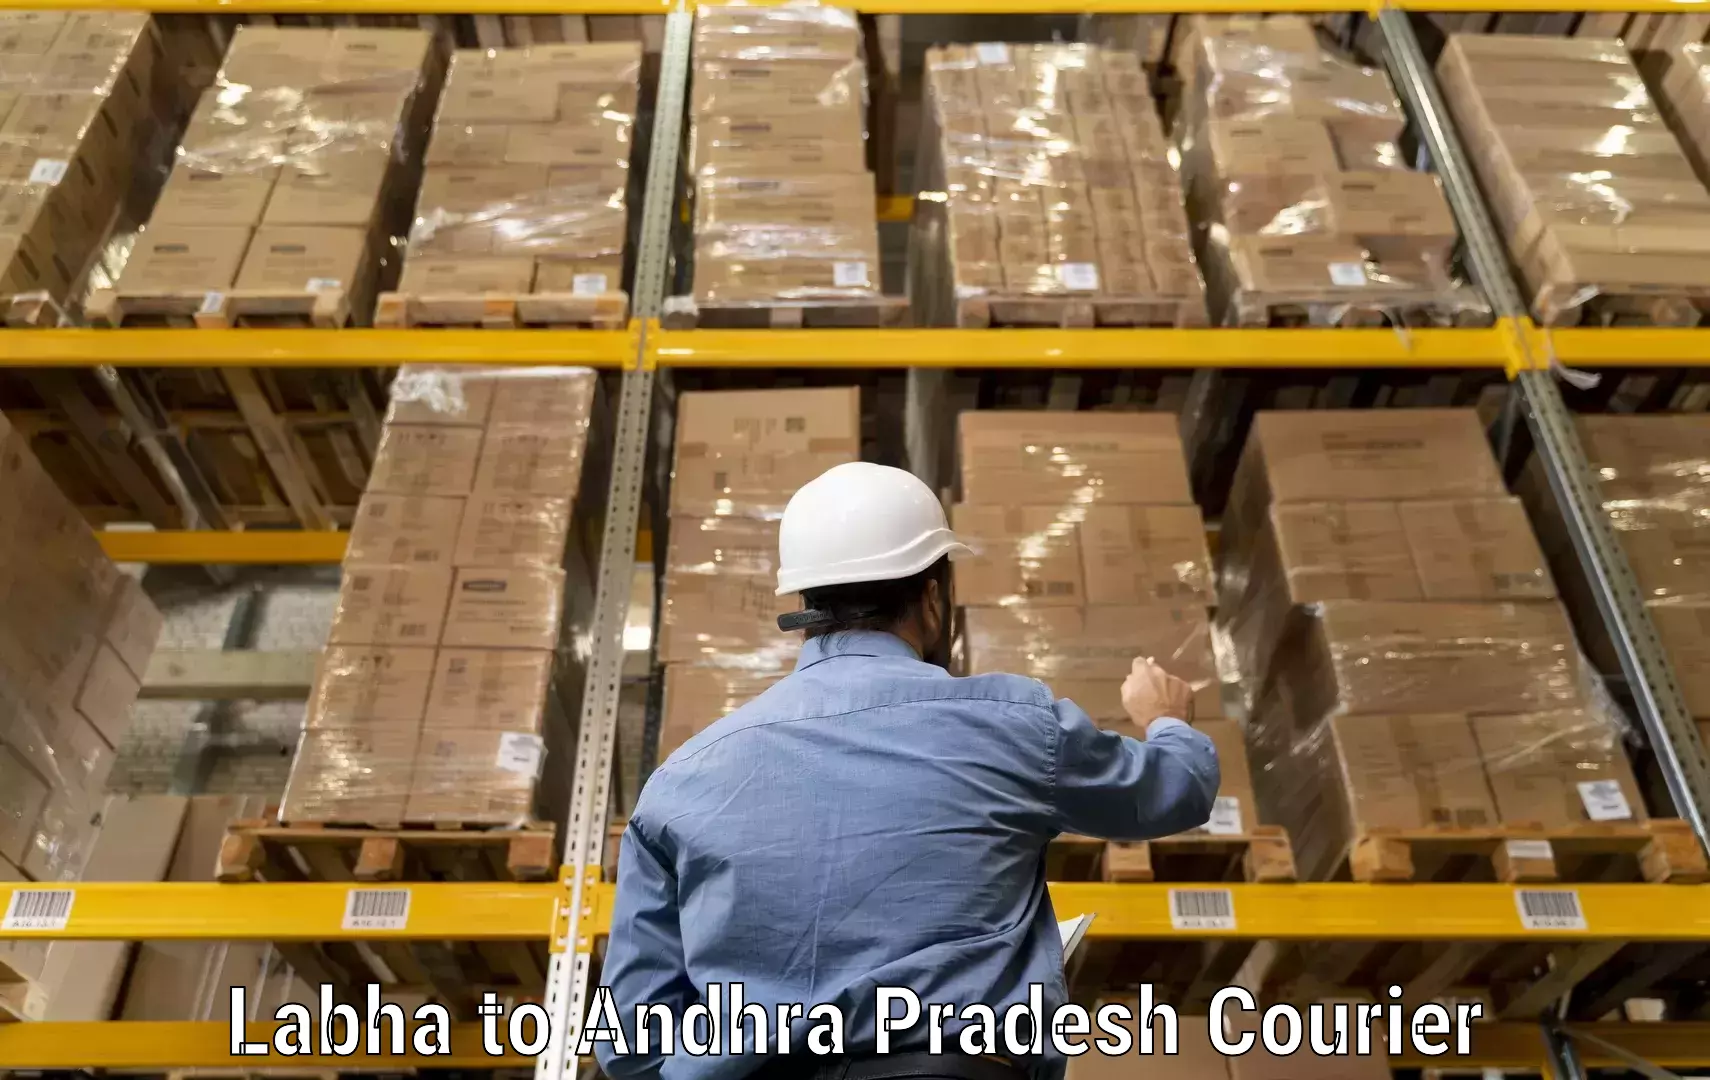 Professional courier handling Labha to Konduru